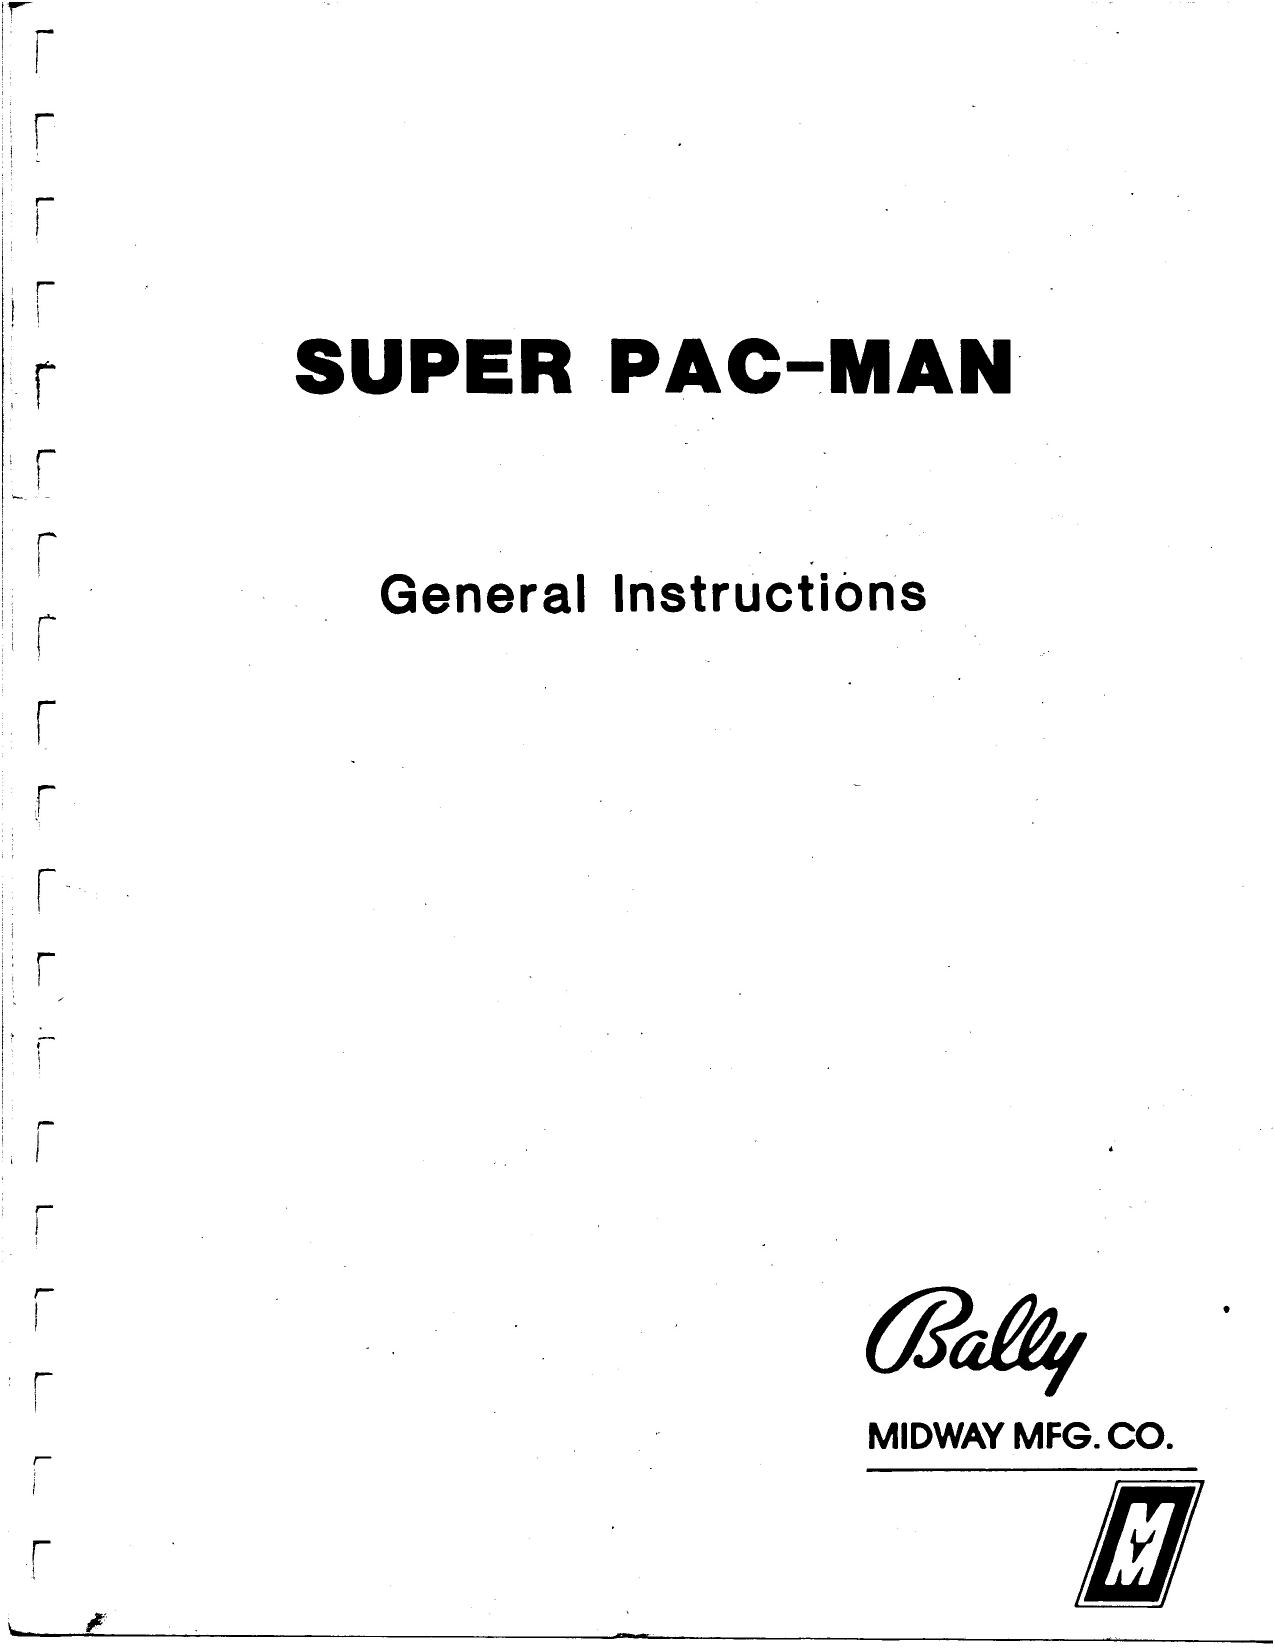 Super Pacman General Instructions